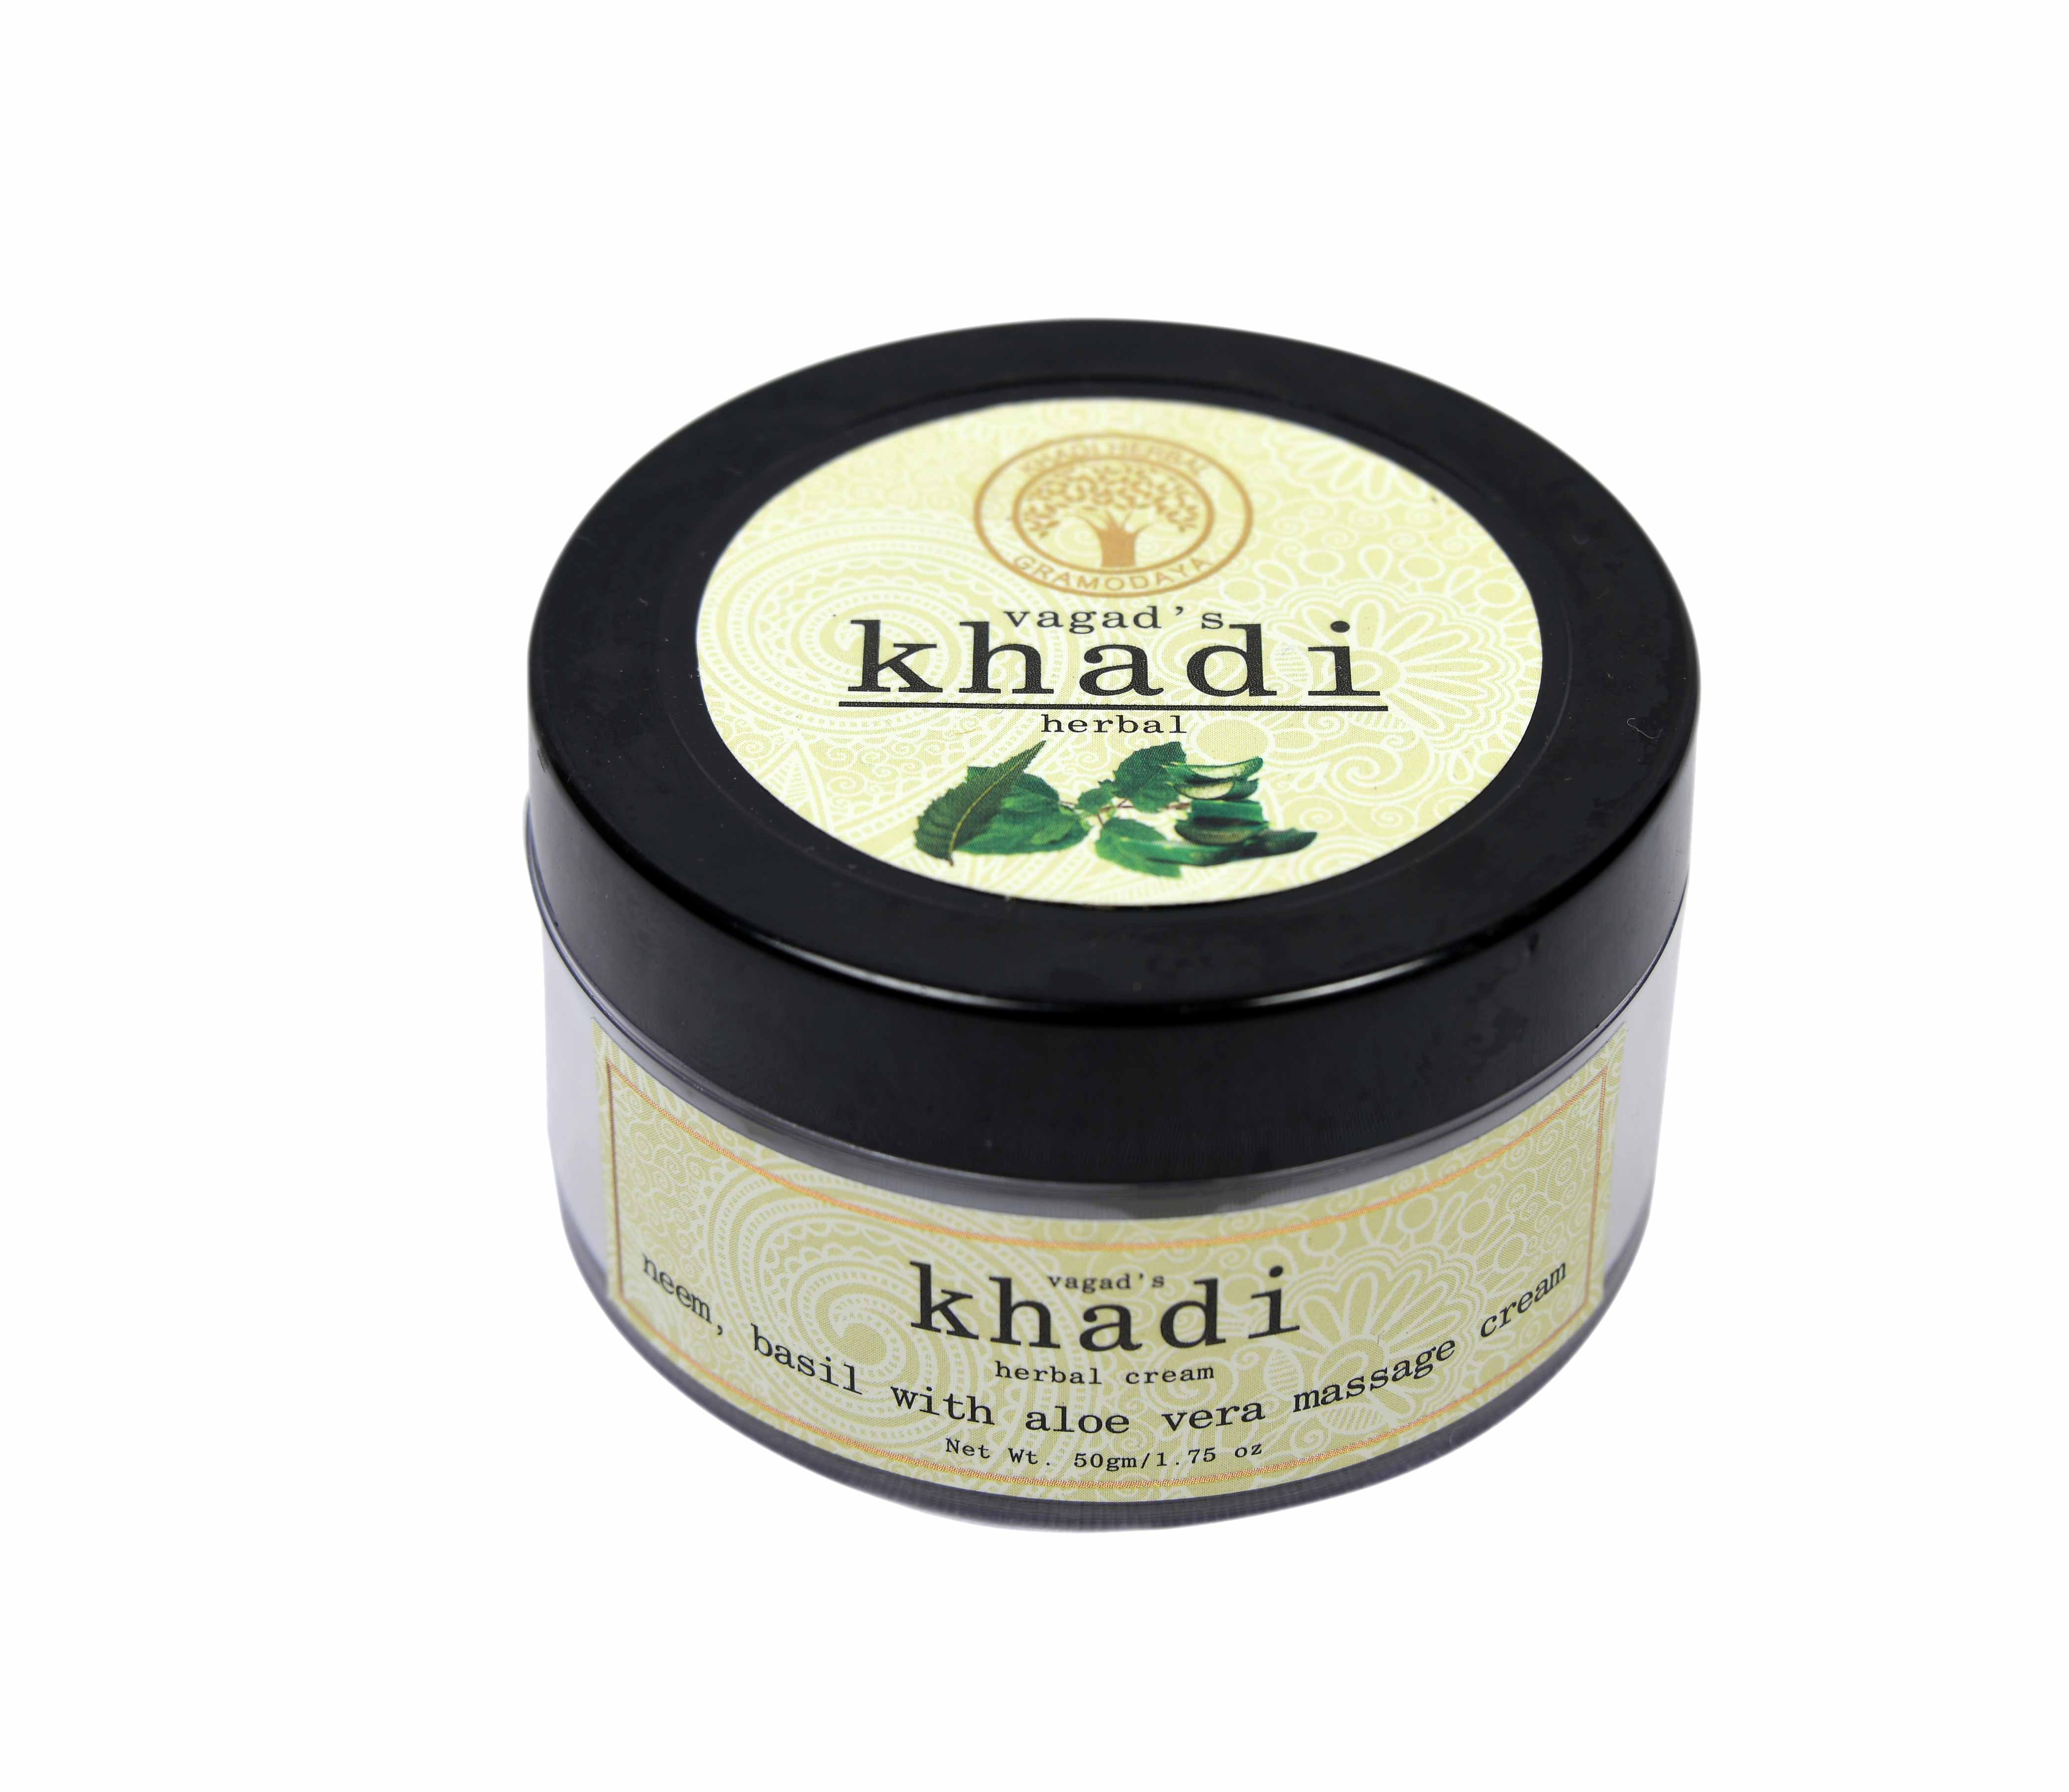 Vagad's Khadi Neem Basil With Aloevera Massage Cream